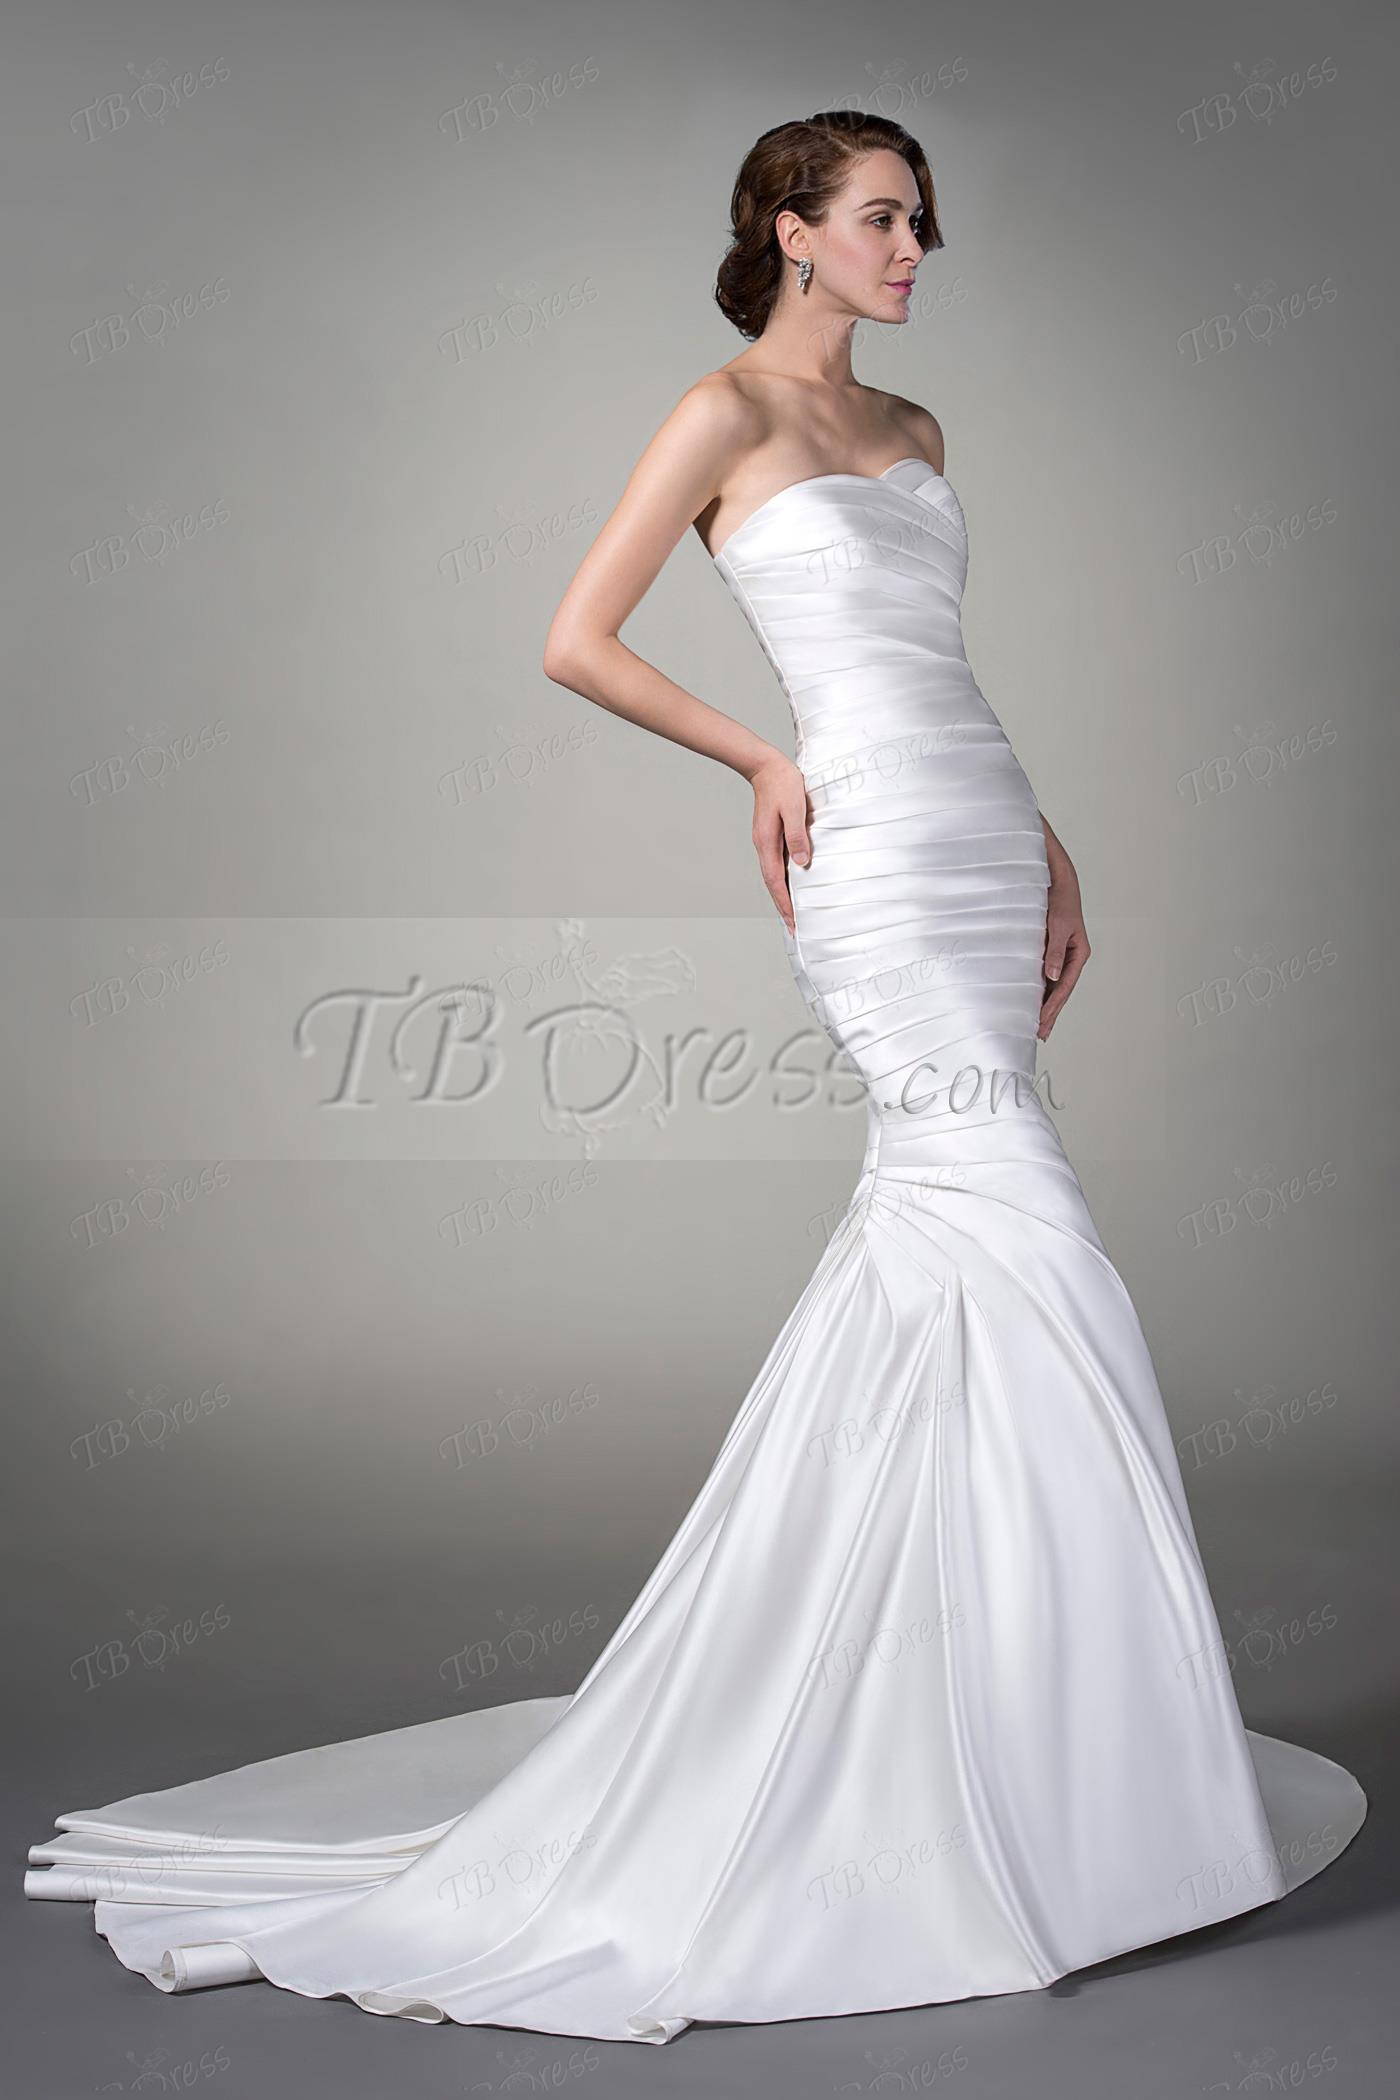 Adward-winning Wedding Dresses With ...